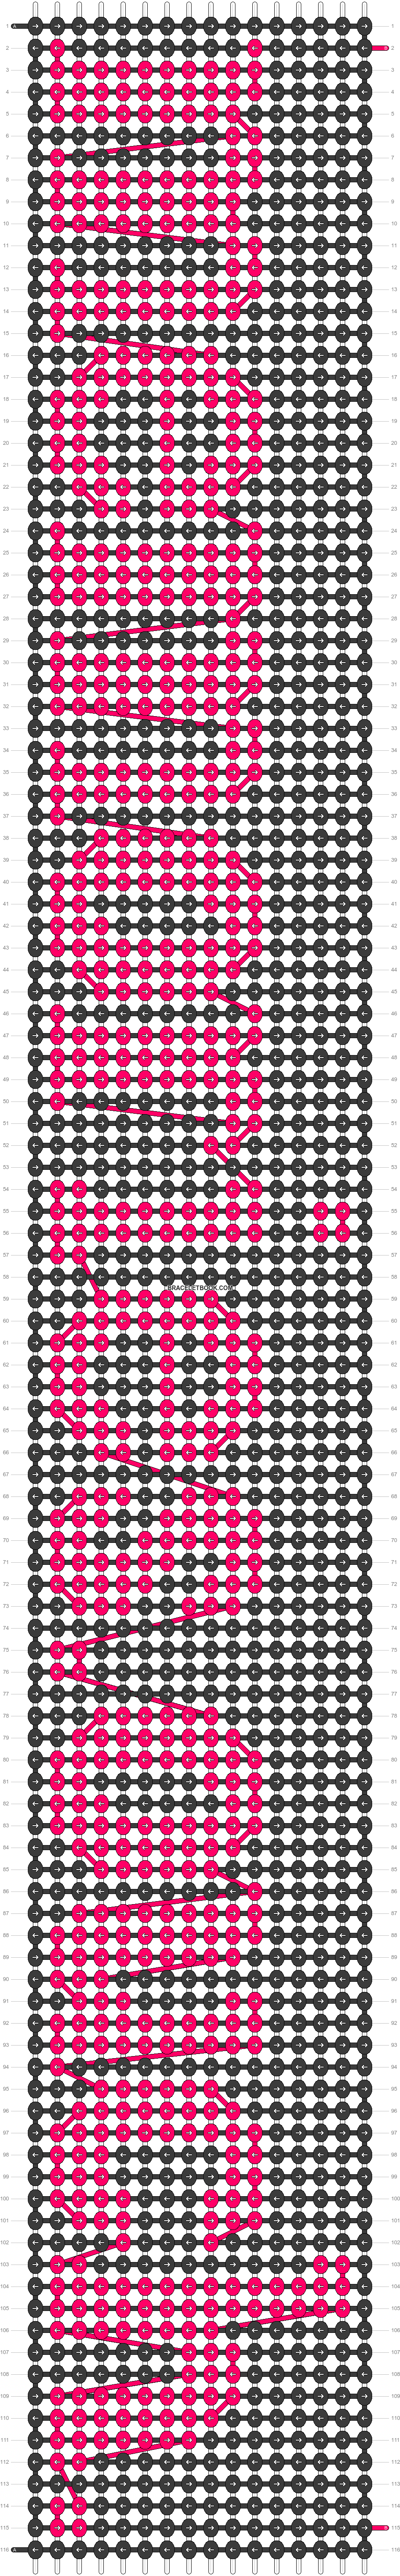 Alpha pattern #61129 variation #149892 pattern